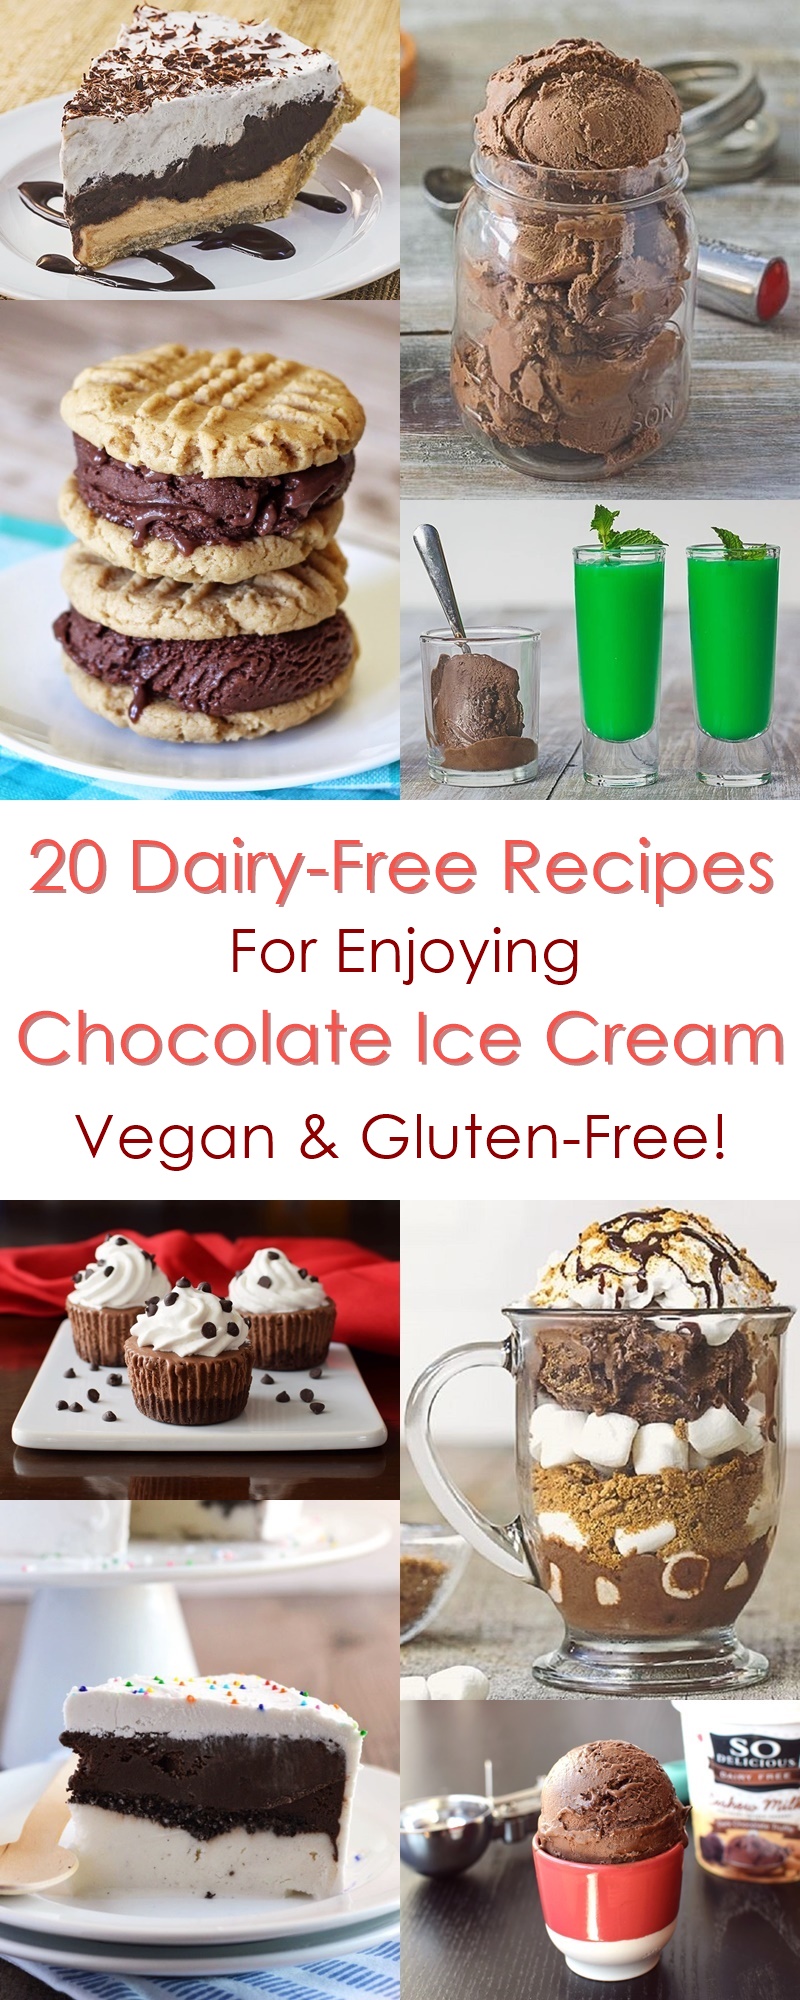 20 Dairy-Free Recipes Using Chocolate Ice Cream (Vegan, gluten-free & soy-free pies, sundaes, cakes & more!)